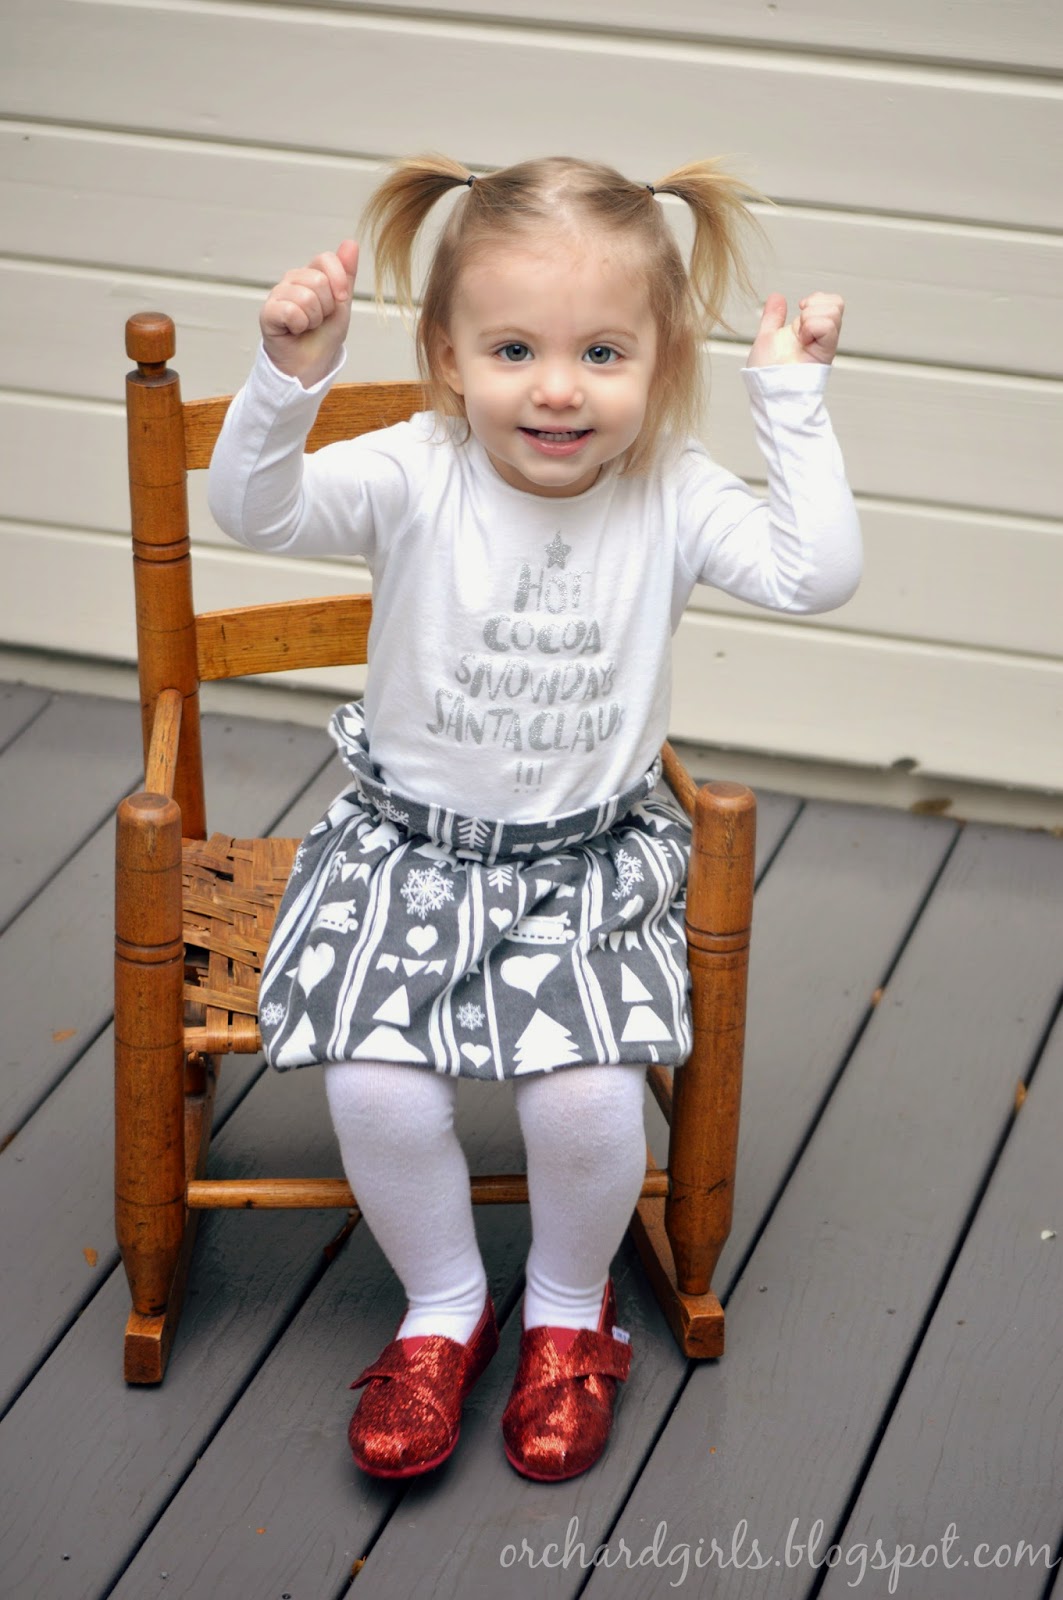 Kids outfit inspirations with Oshkosh B'gosh (sponsored) #mc #givehappy